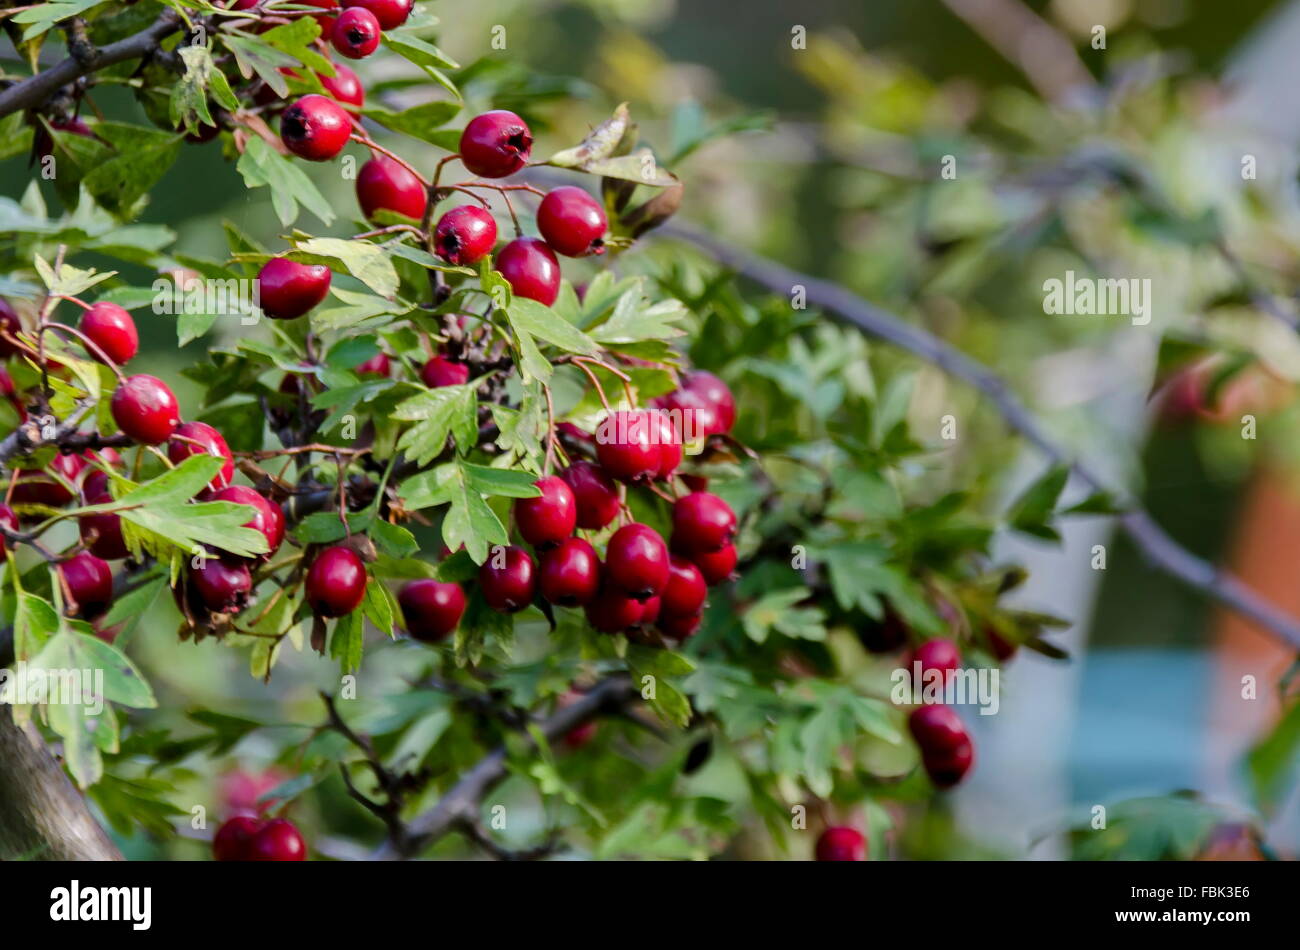 Plain hawthorn (Crataegus monogyna) shrub with fruits, Pancharevo, Bulgaria Stock Photo